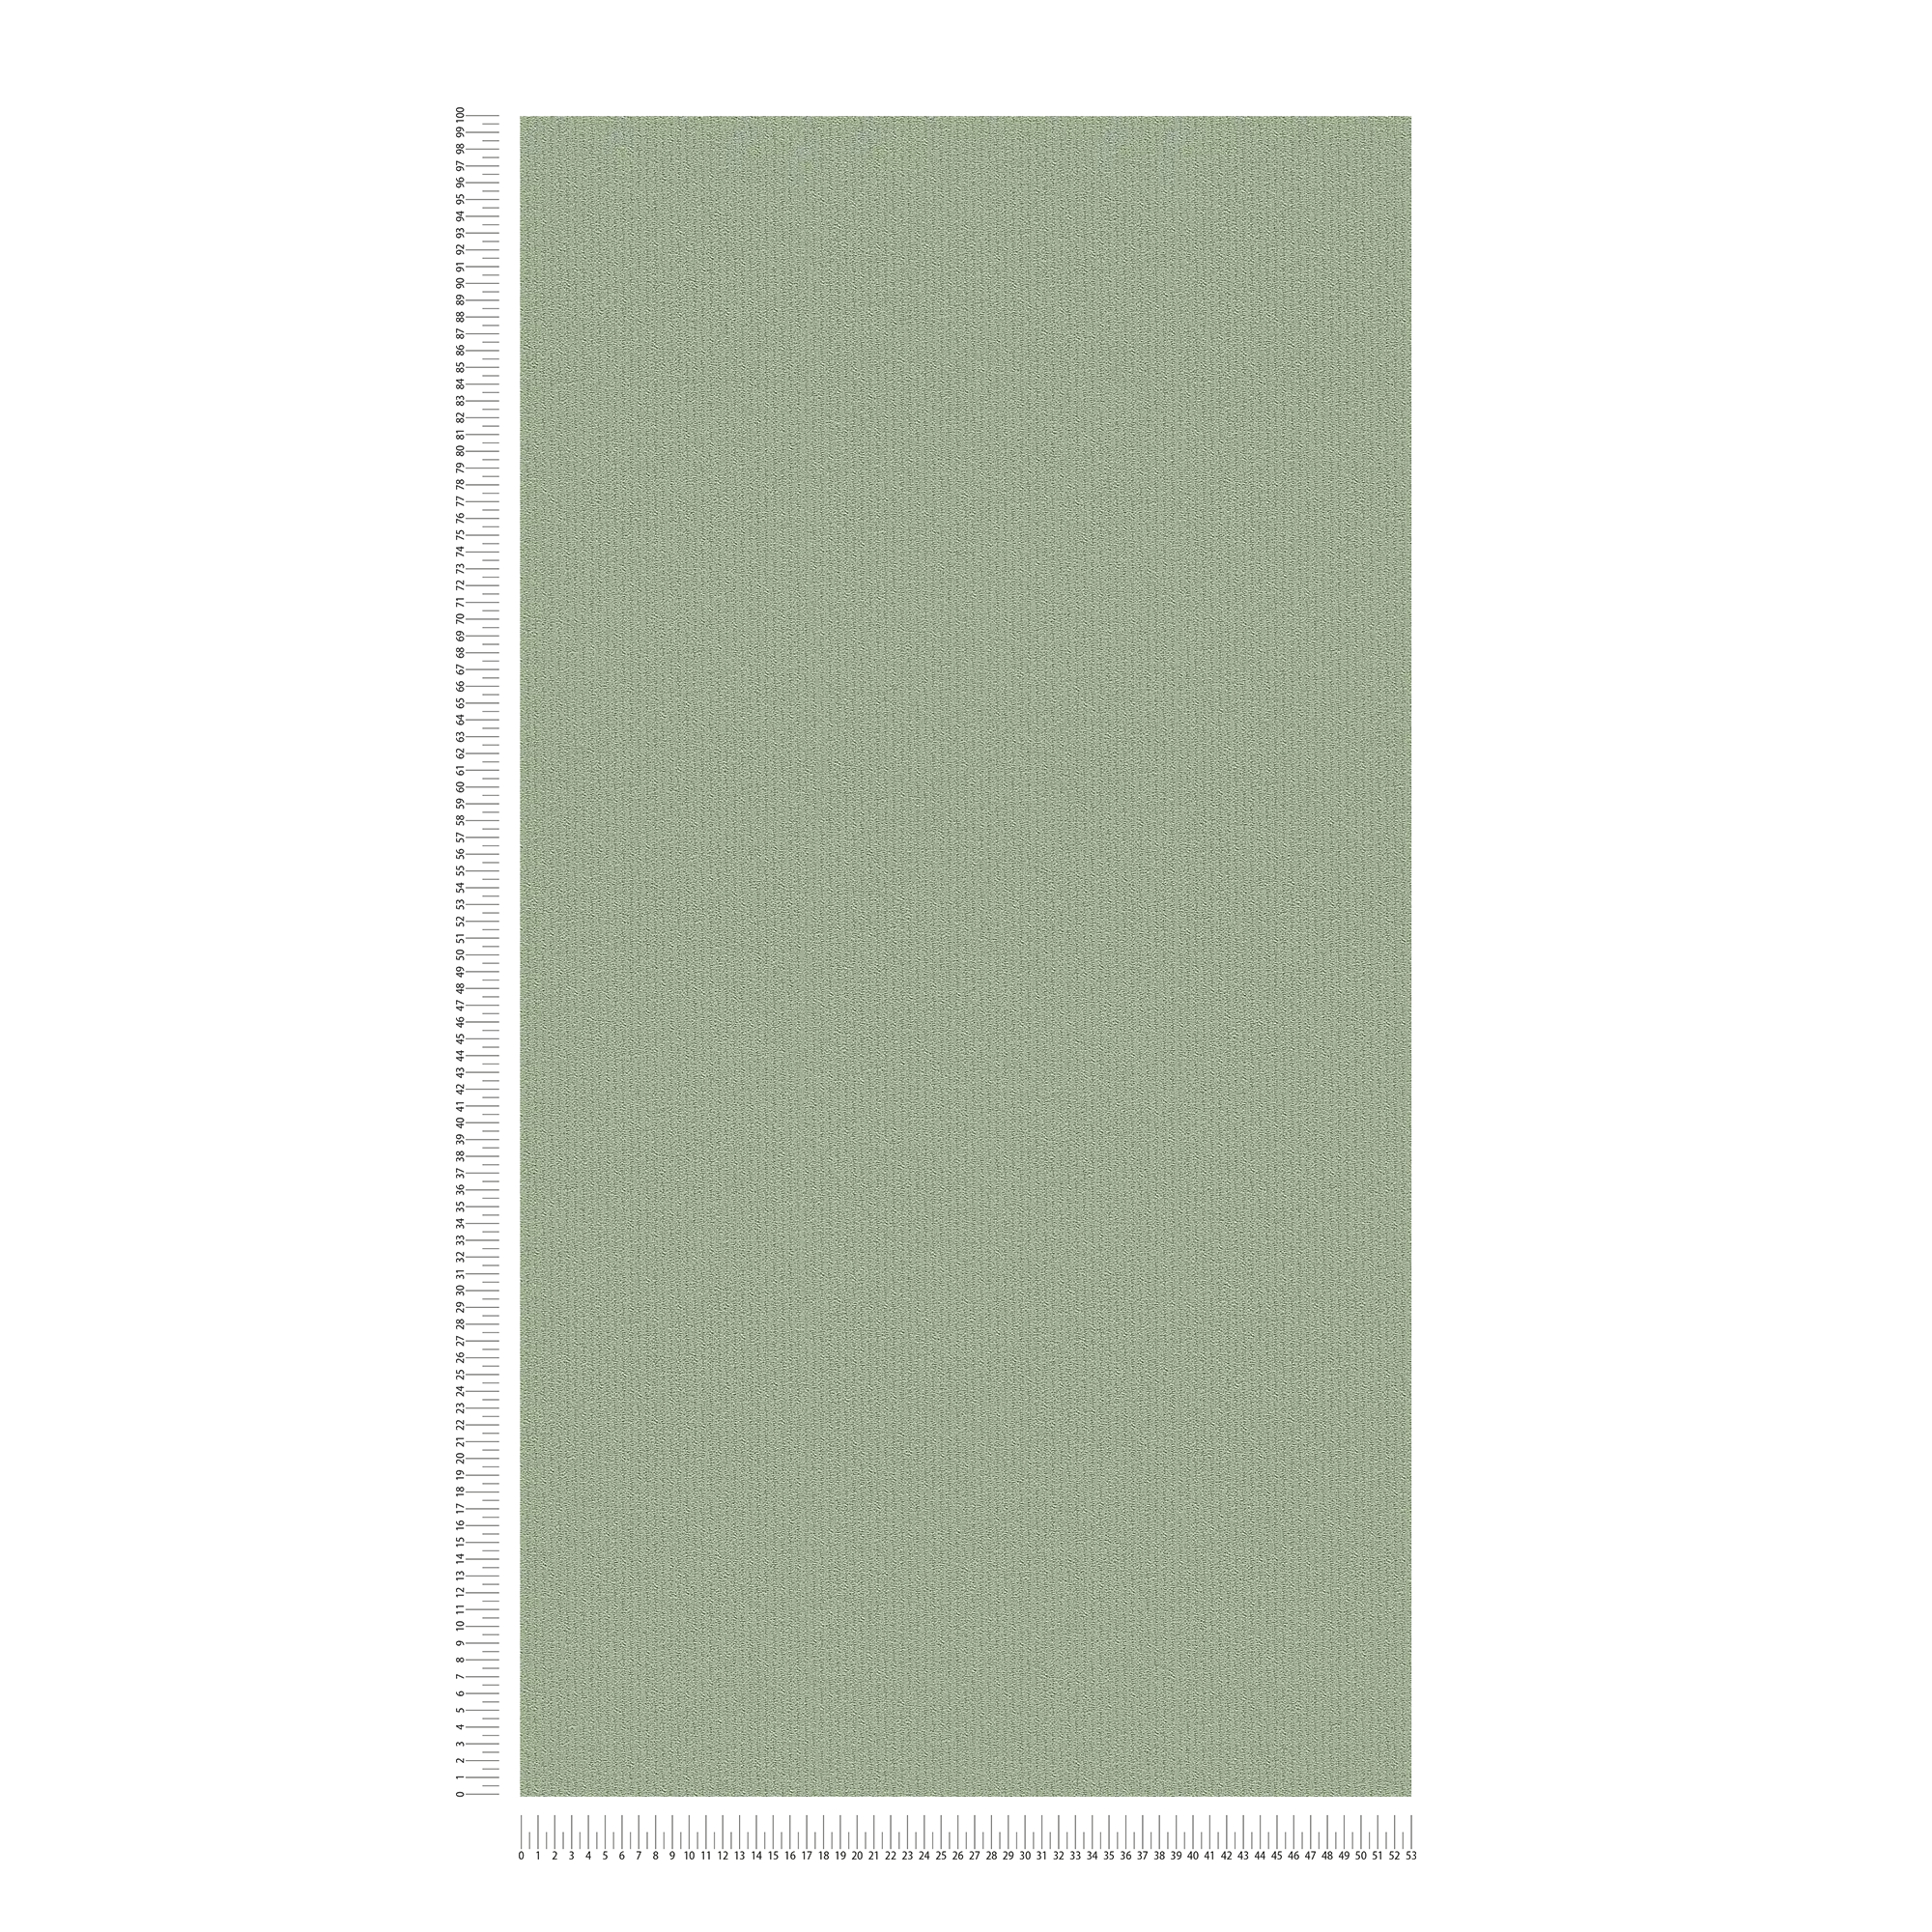             Papel pintado texturizado con diseño de rayas - verde
        